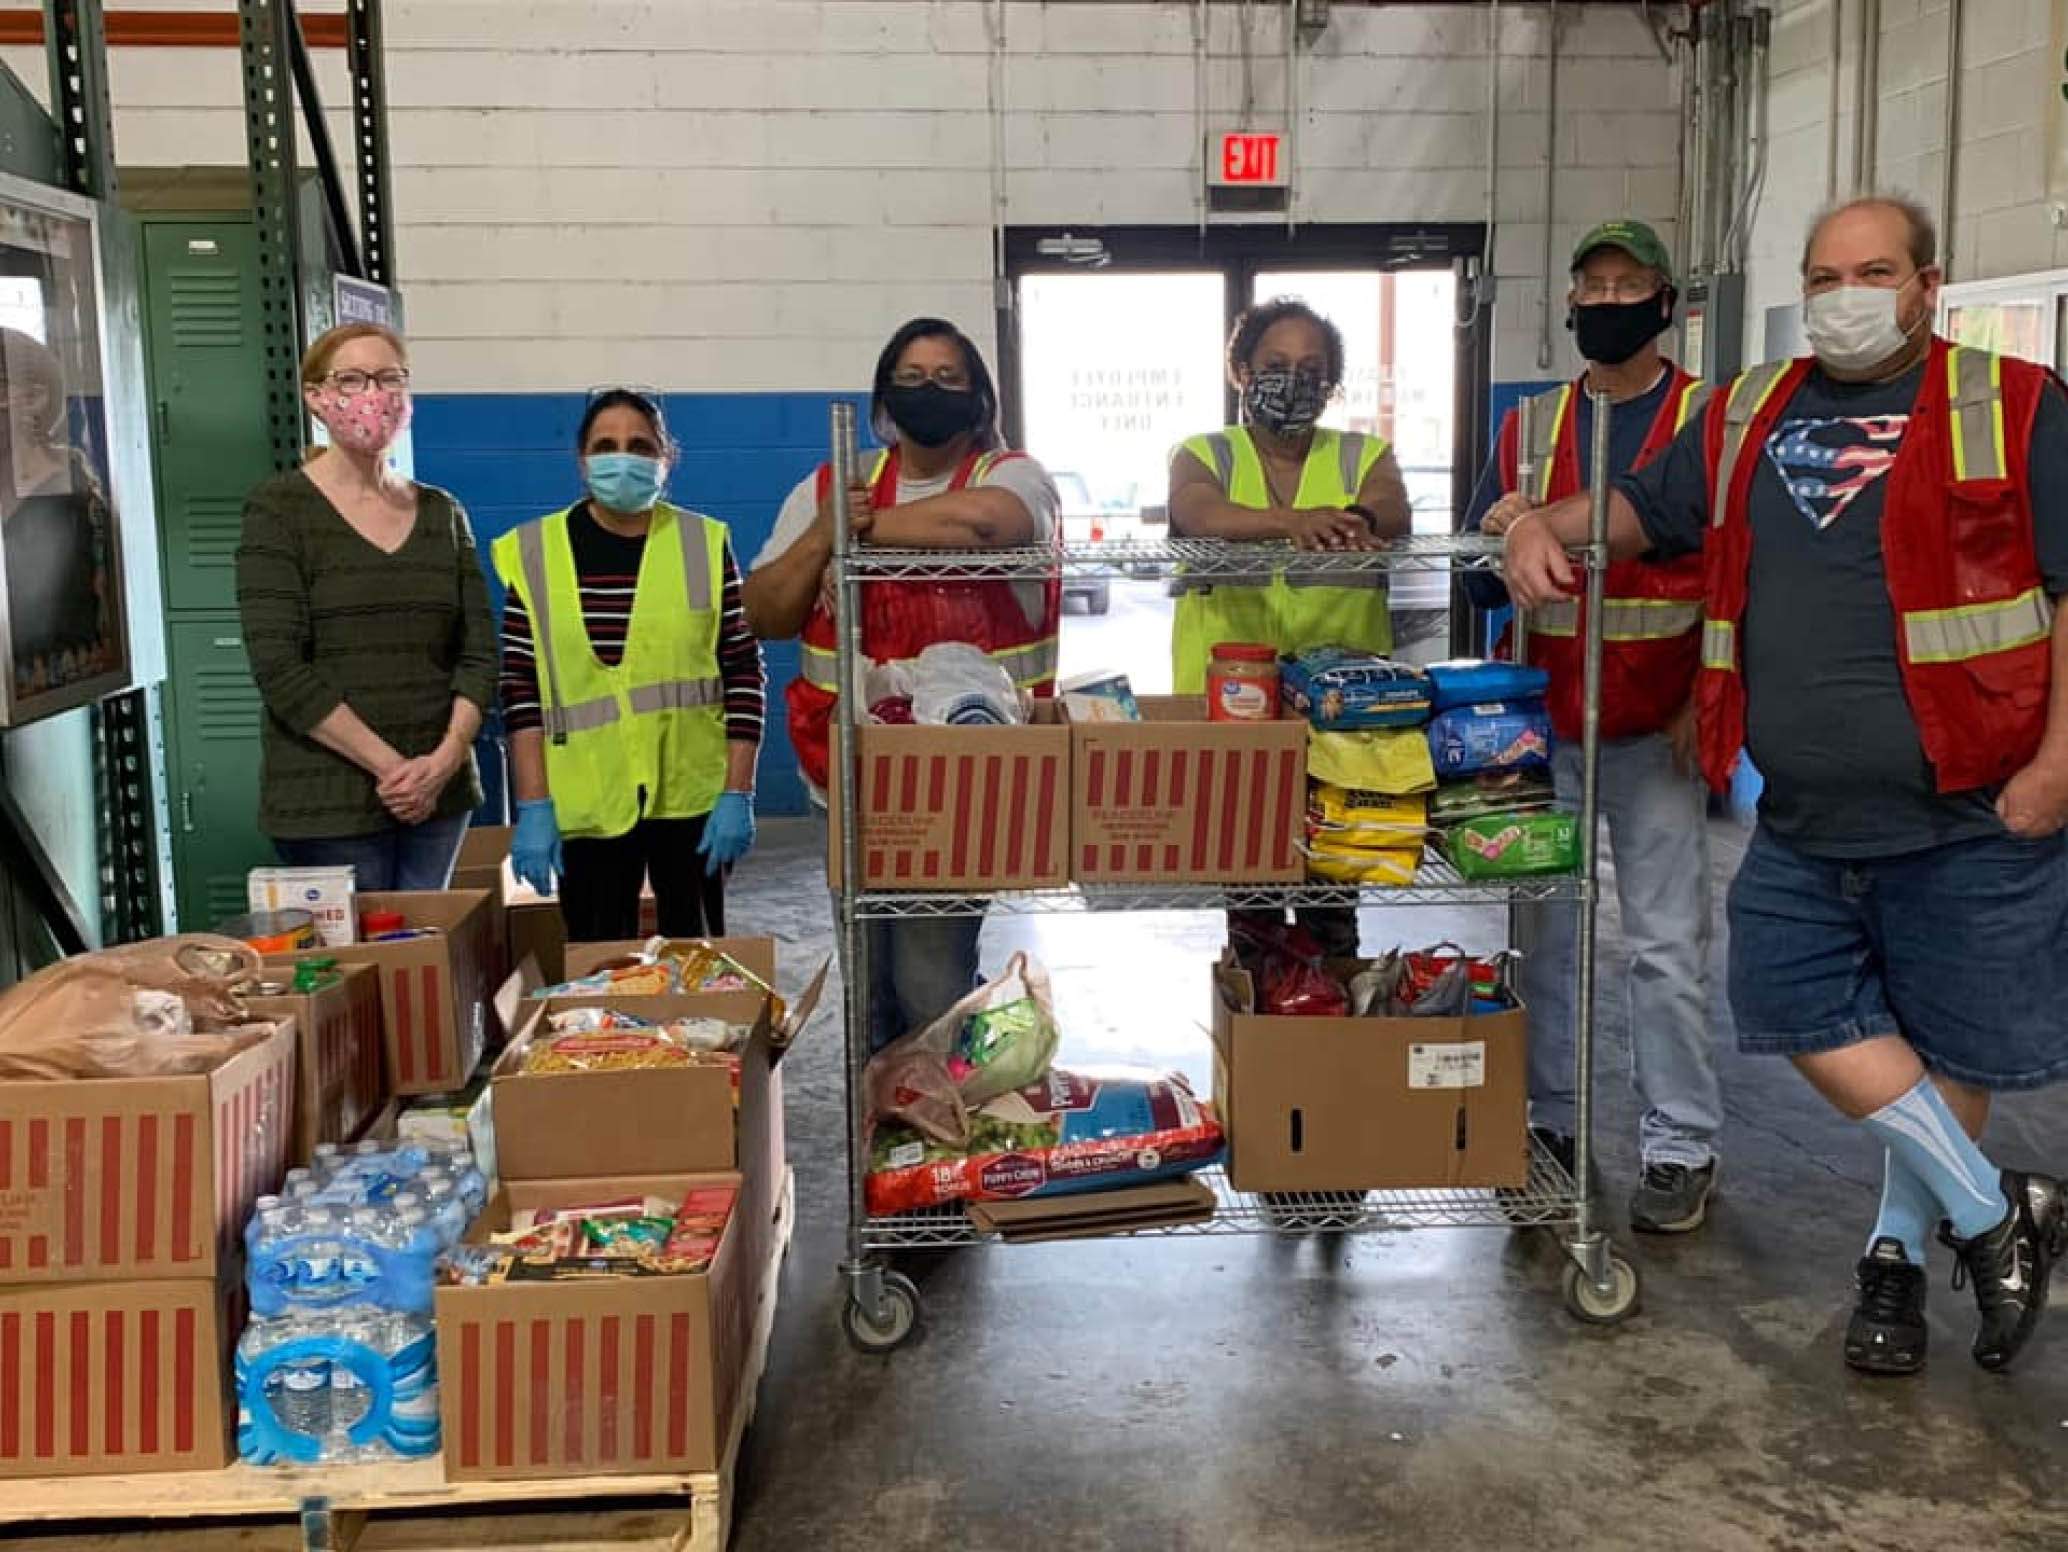 ReaderLink volunteers with food donations at Feeding America